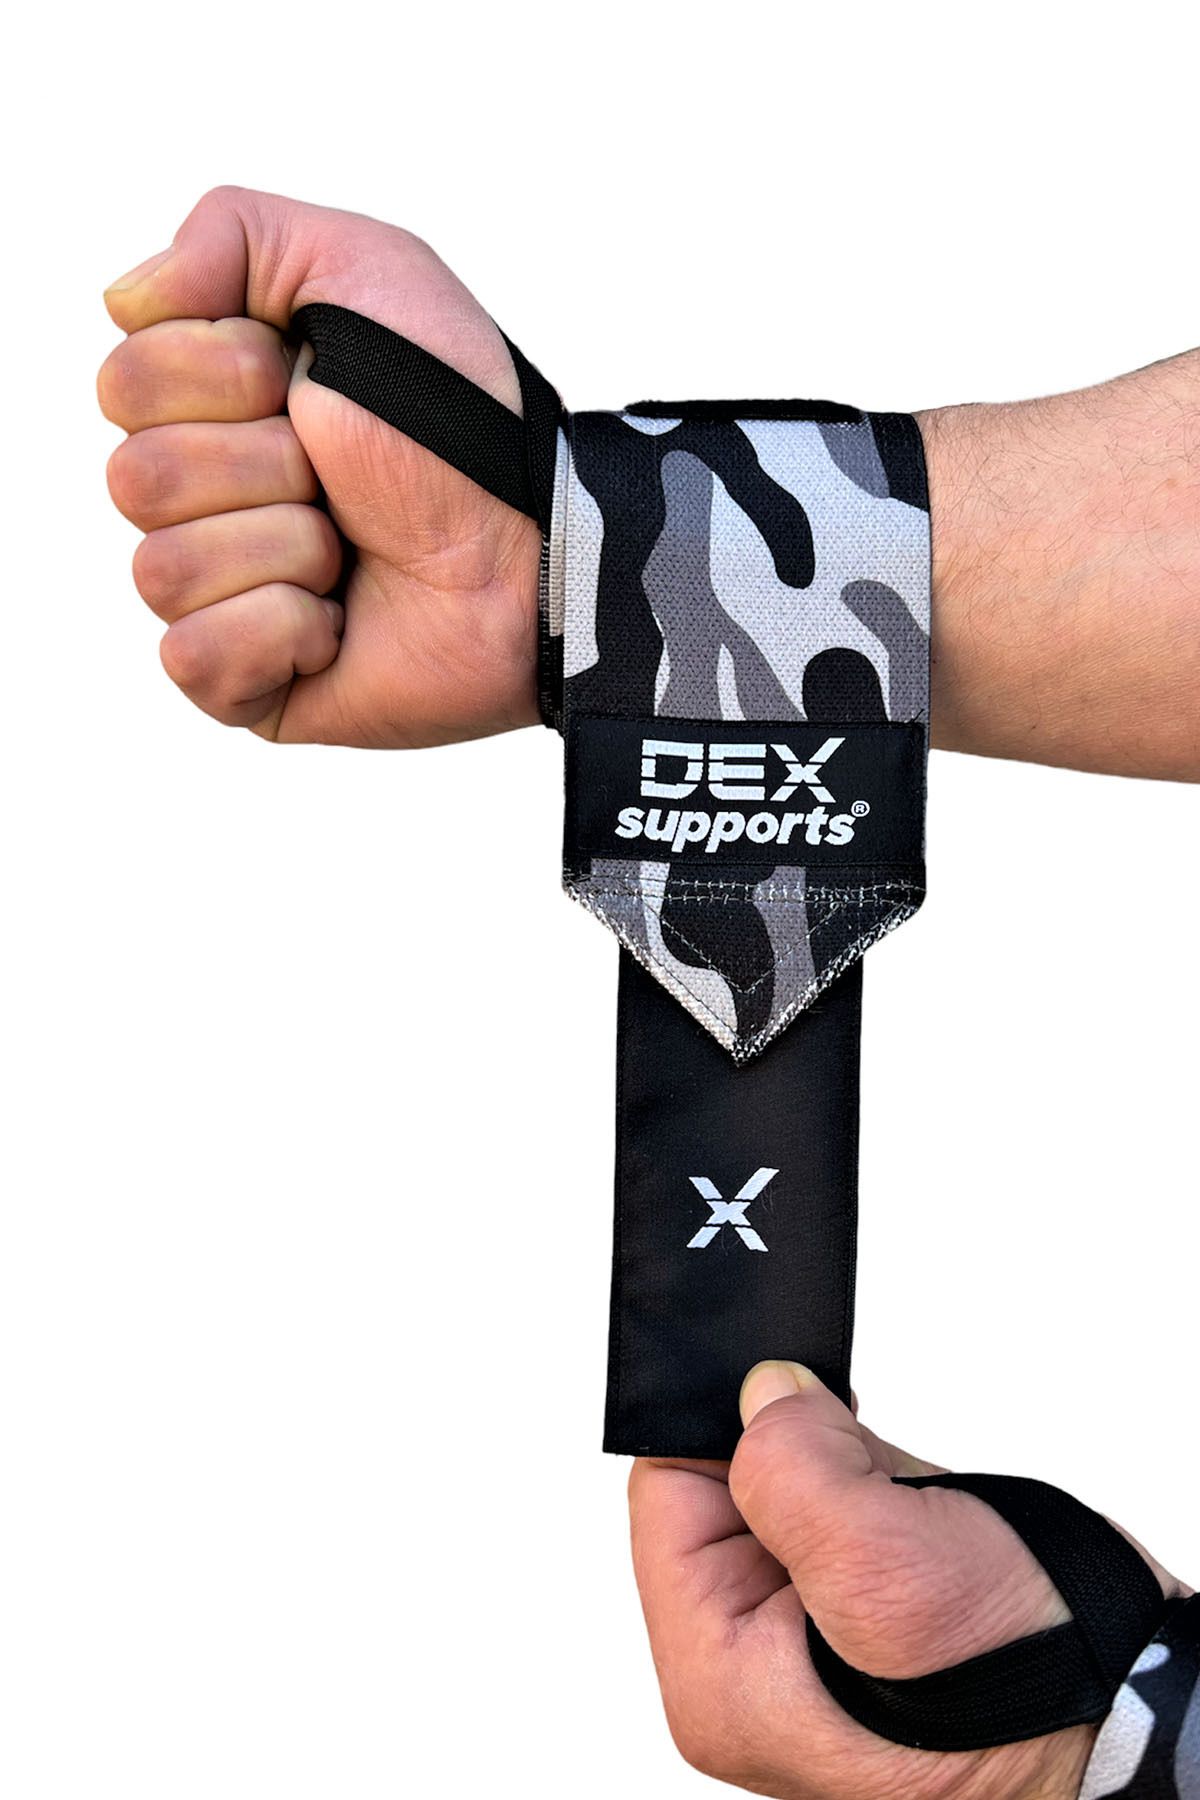 Dex Supports Lasting Energy Fitness Bilek Bandajı Wrist Wraps Kamuflaj 2'li Paket